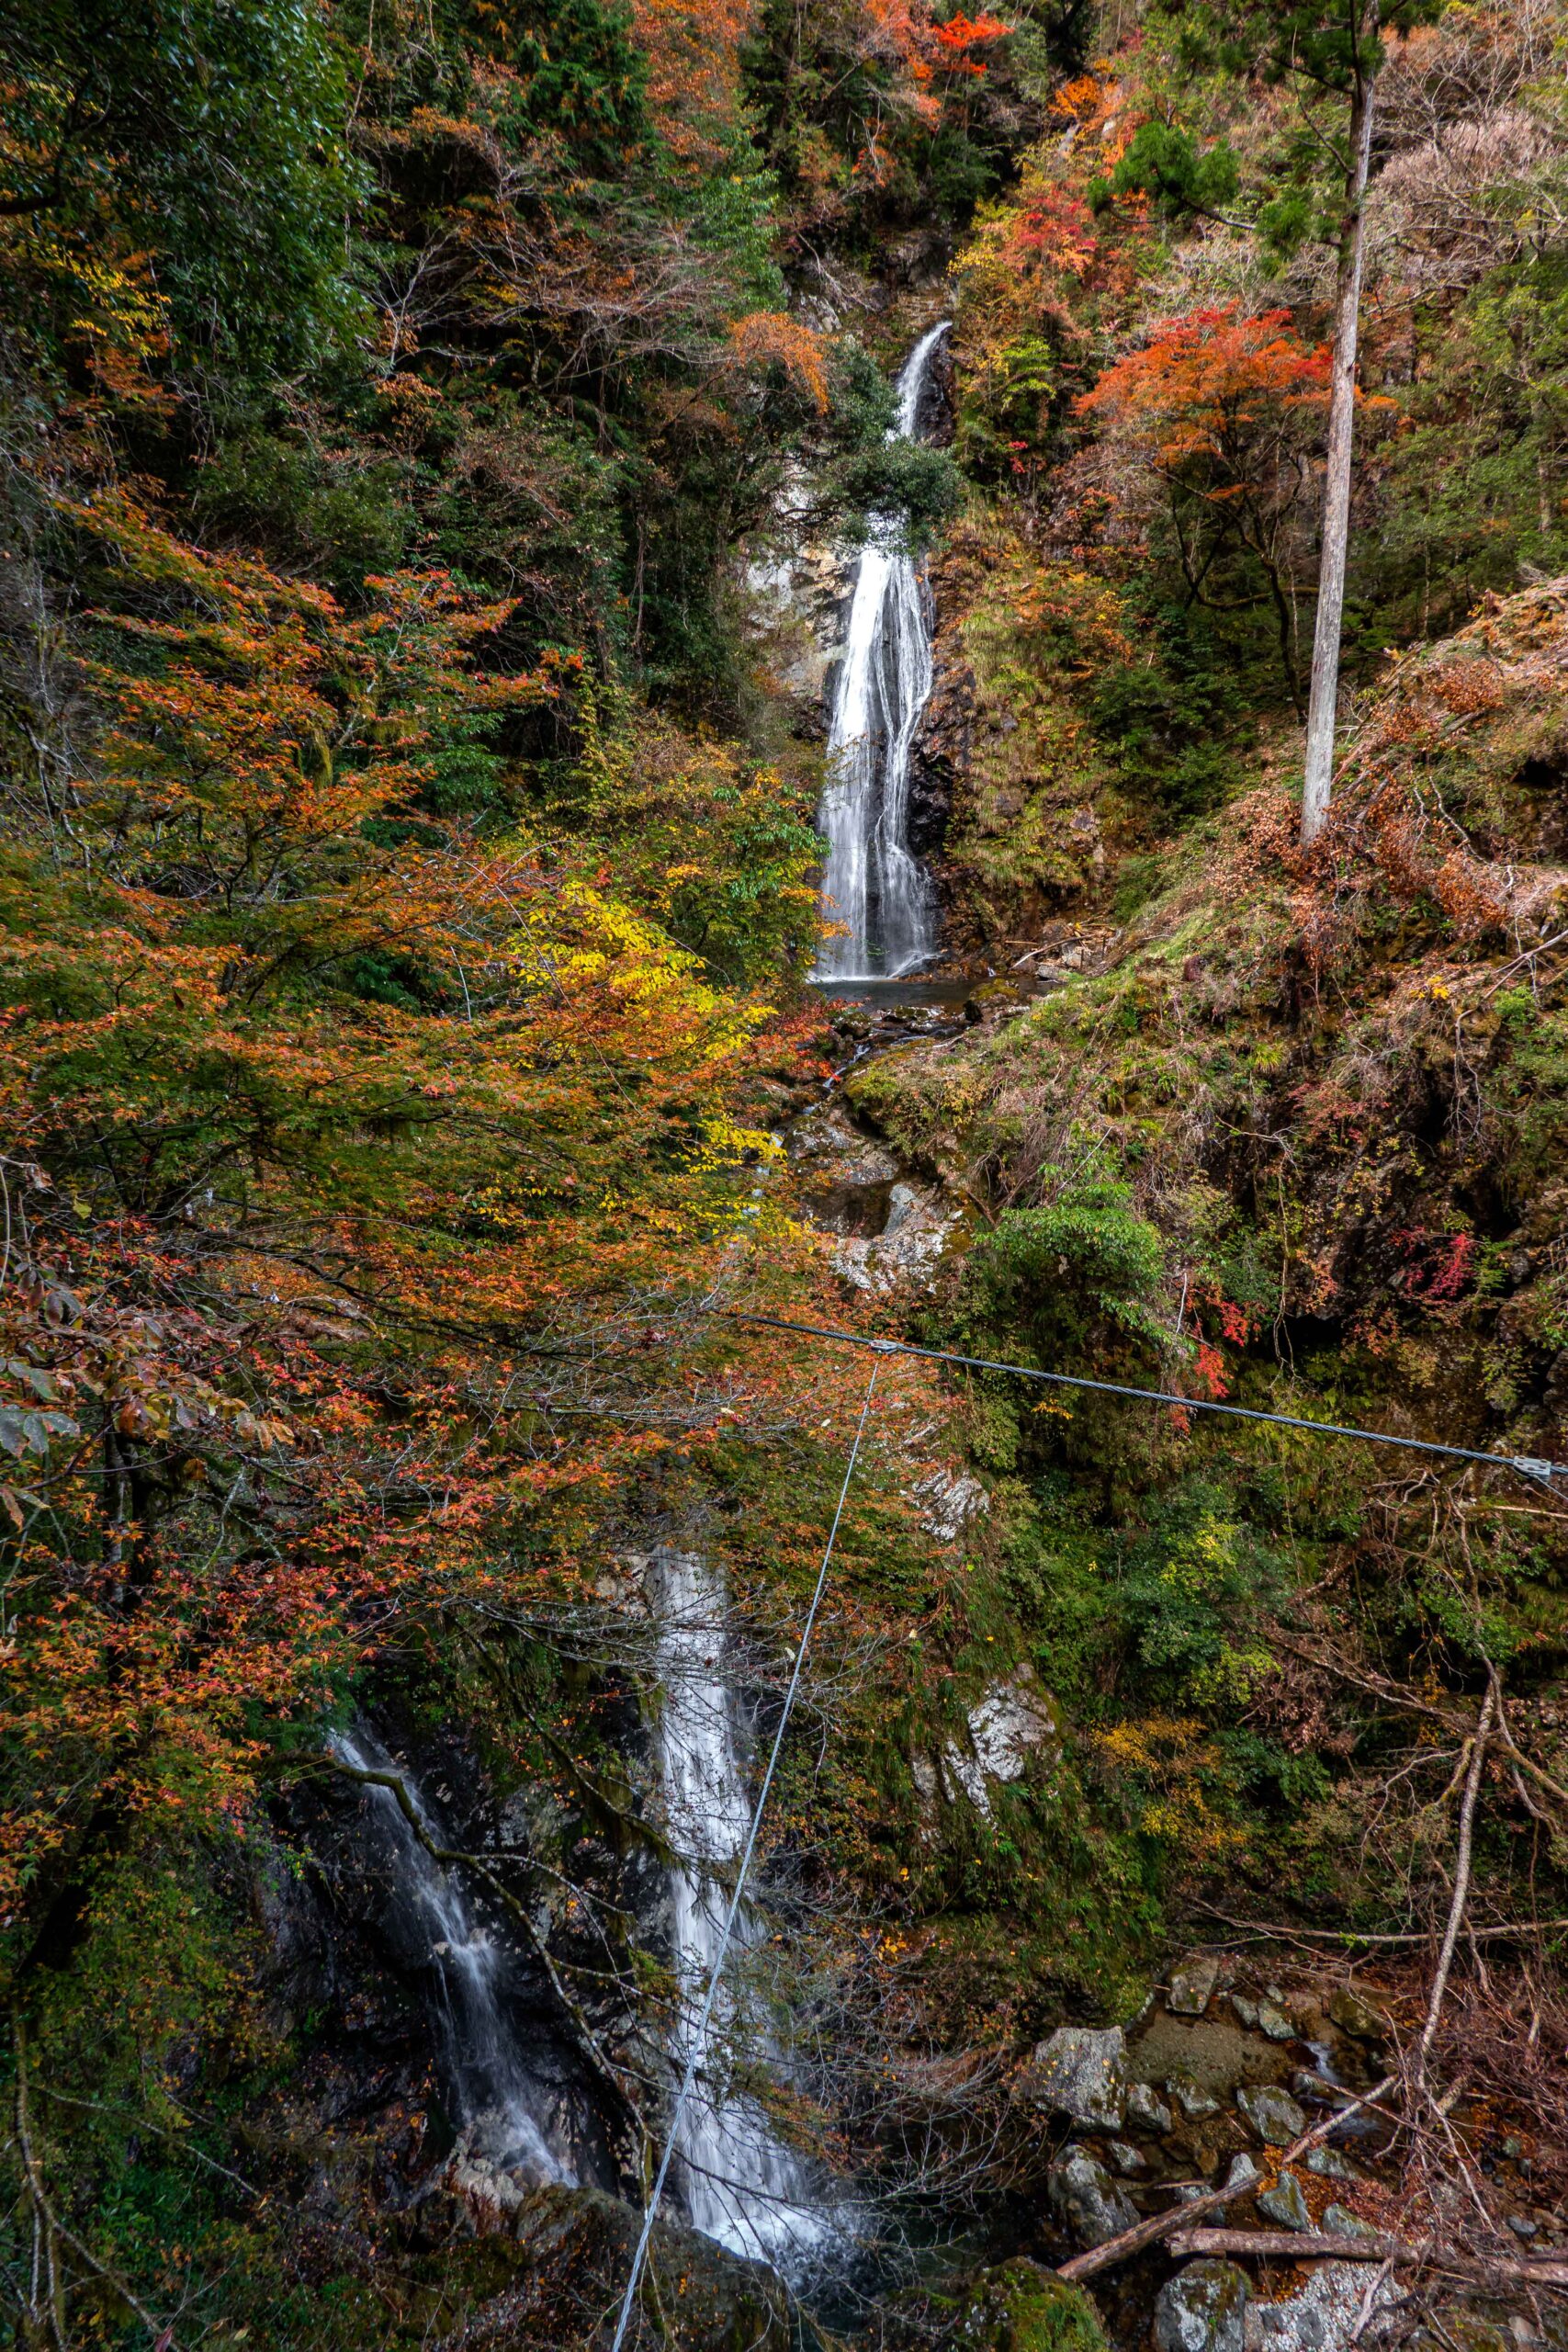 DSC07967-scaled 兵庫県  原不動滝(日本の滝100選に選定された紅葉景色の美しい絶景の滝 ! 撮影した写真の紹介、 アクセス情報など)　